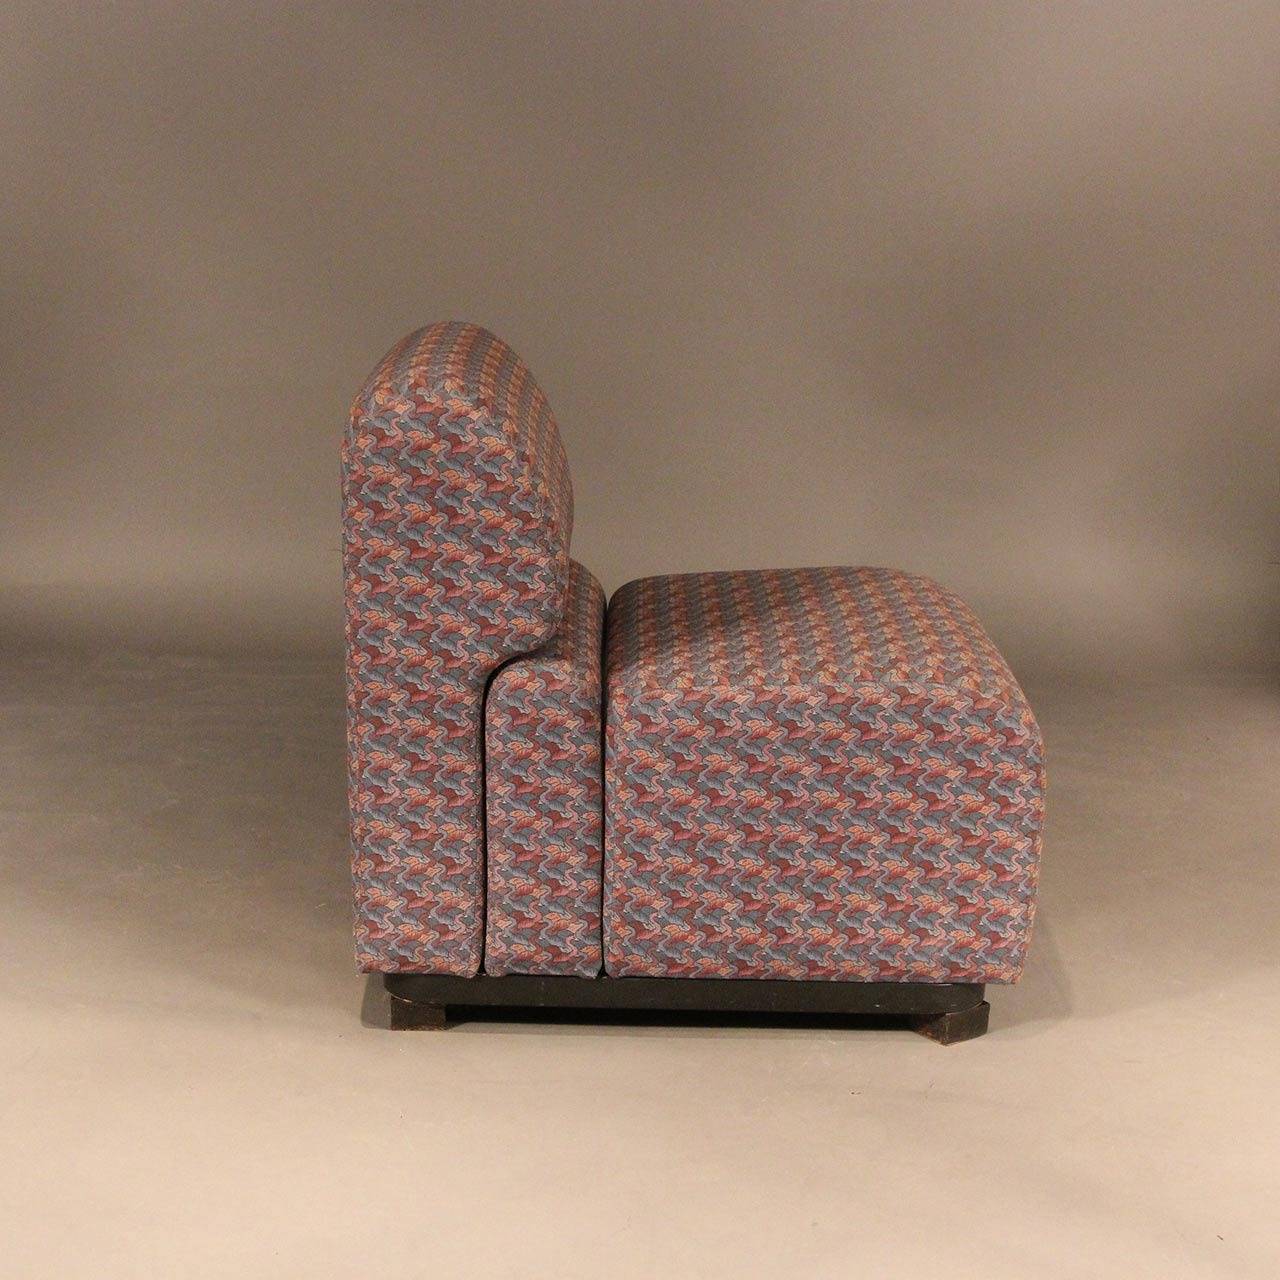 Mid-Century Modern Sculptural Chair Influenced by Pierre Paulin and M.C. Escher